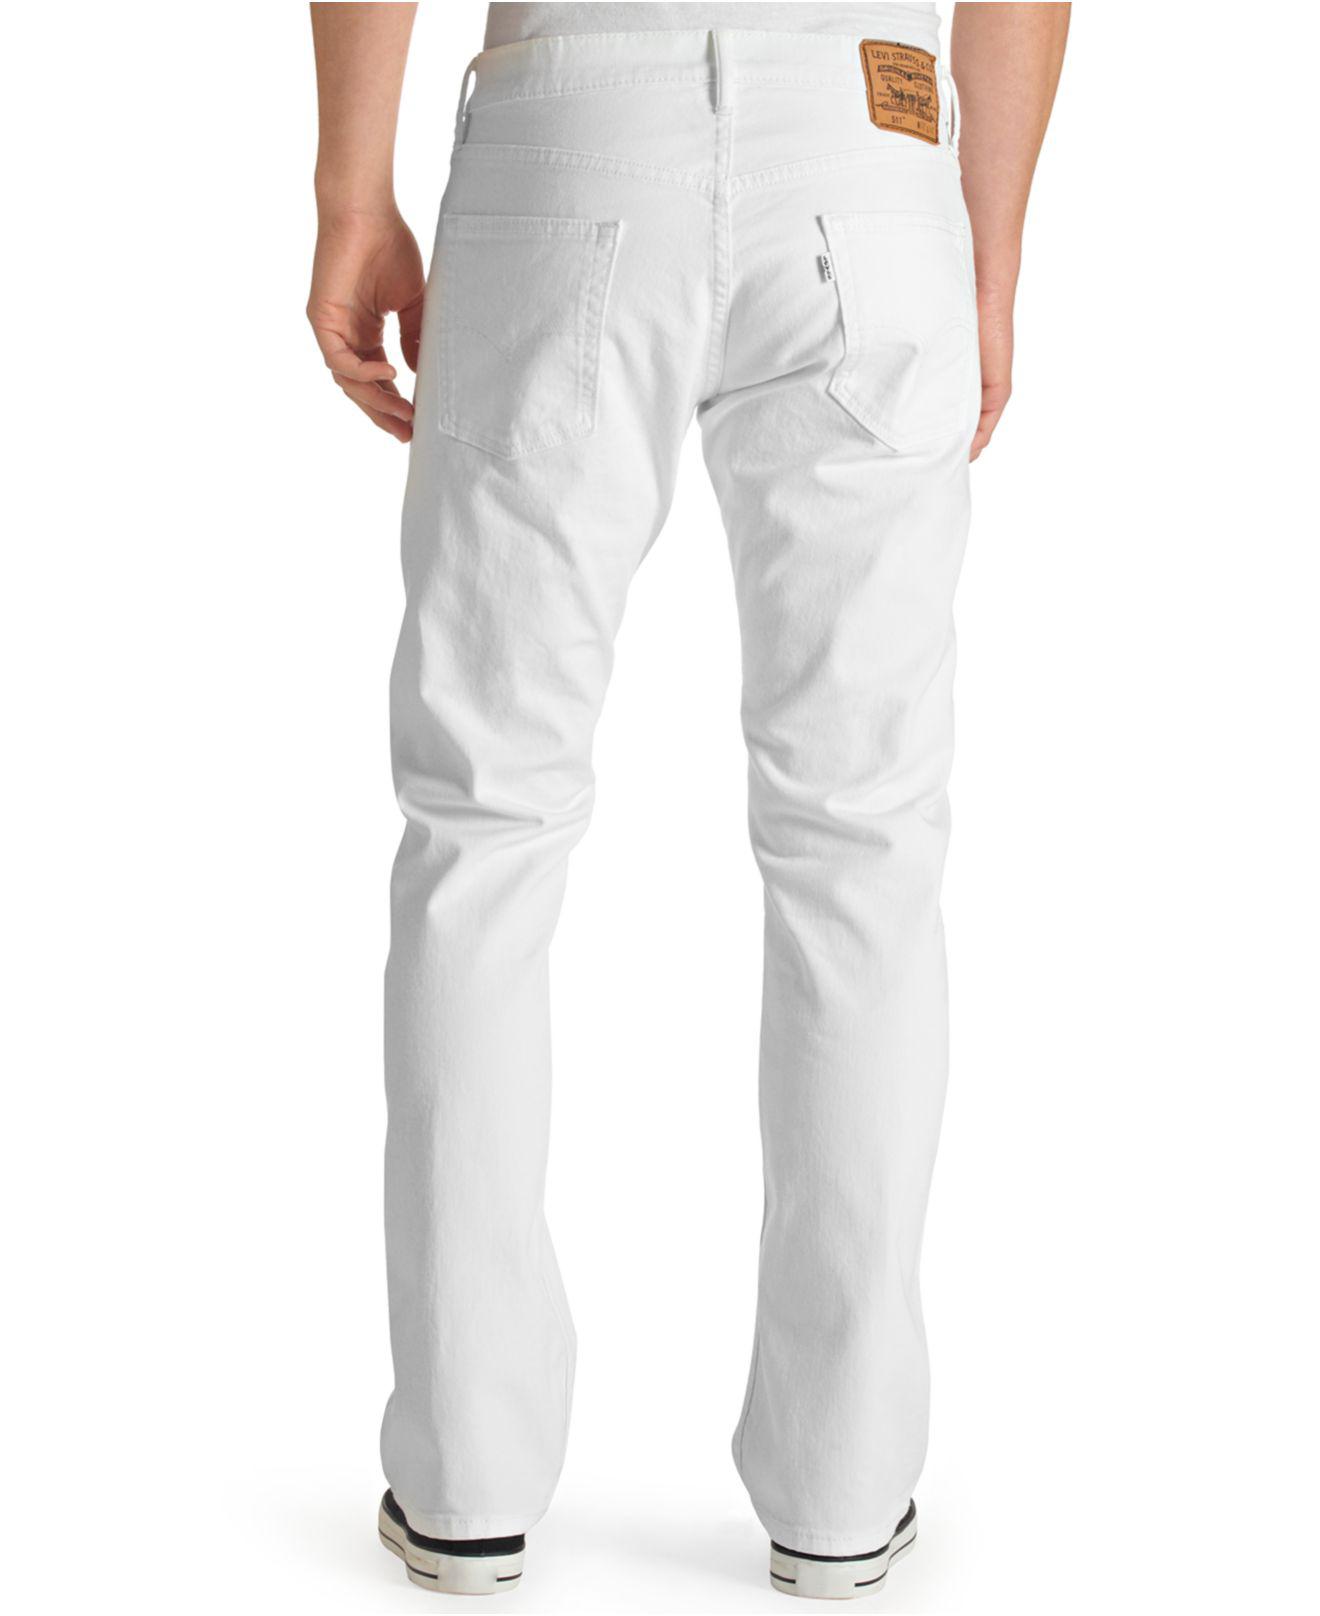 levis 541 white jeans online -